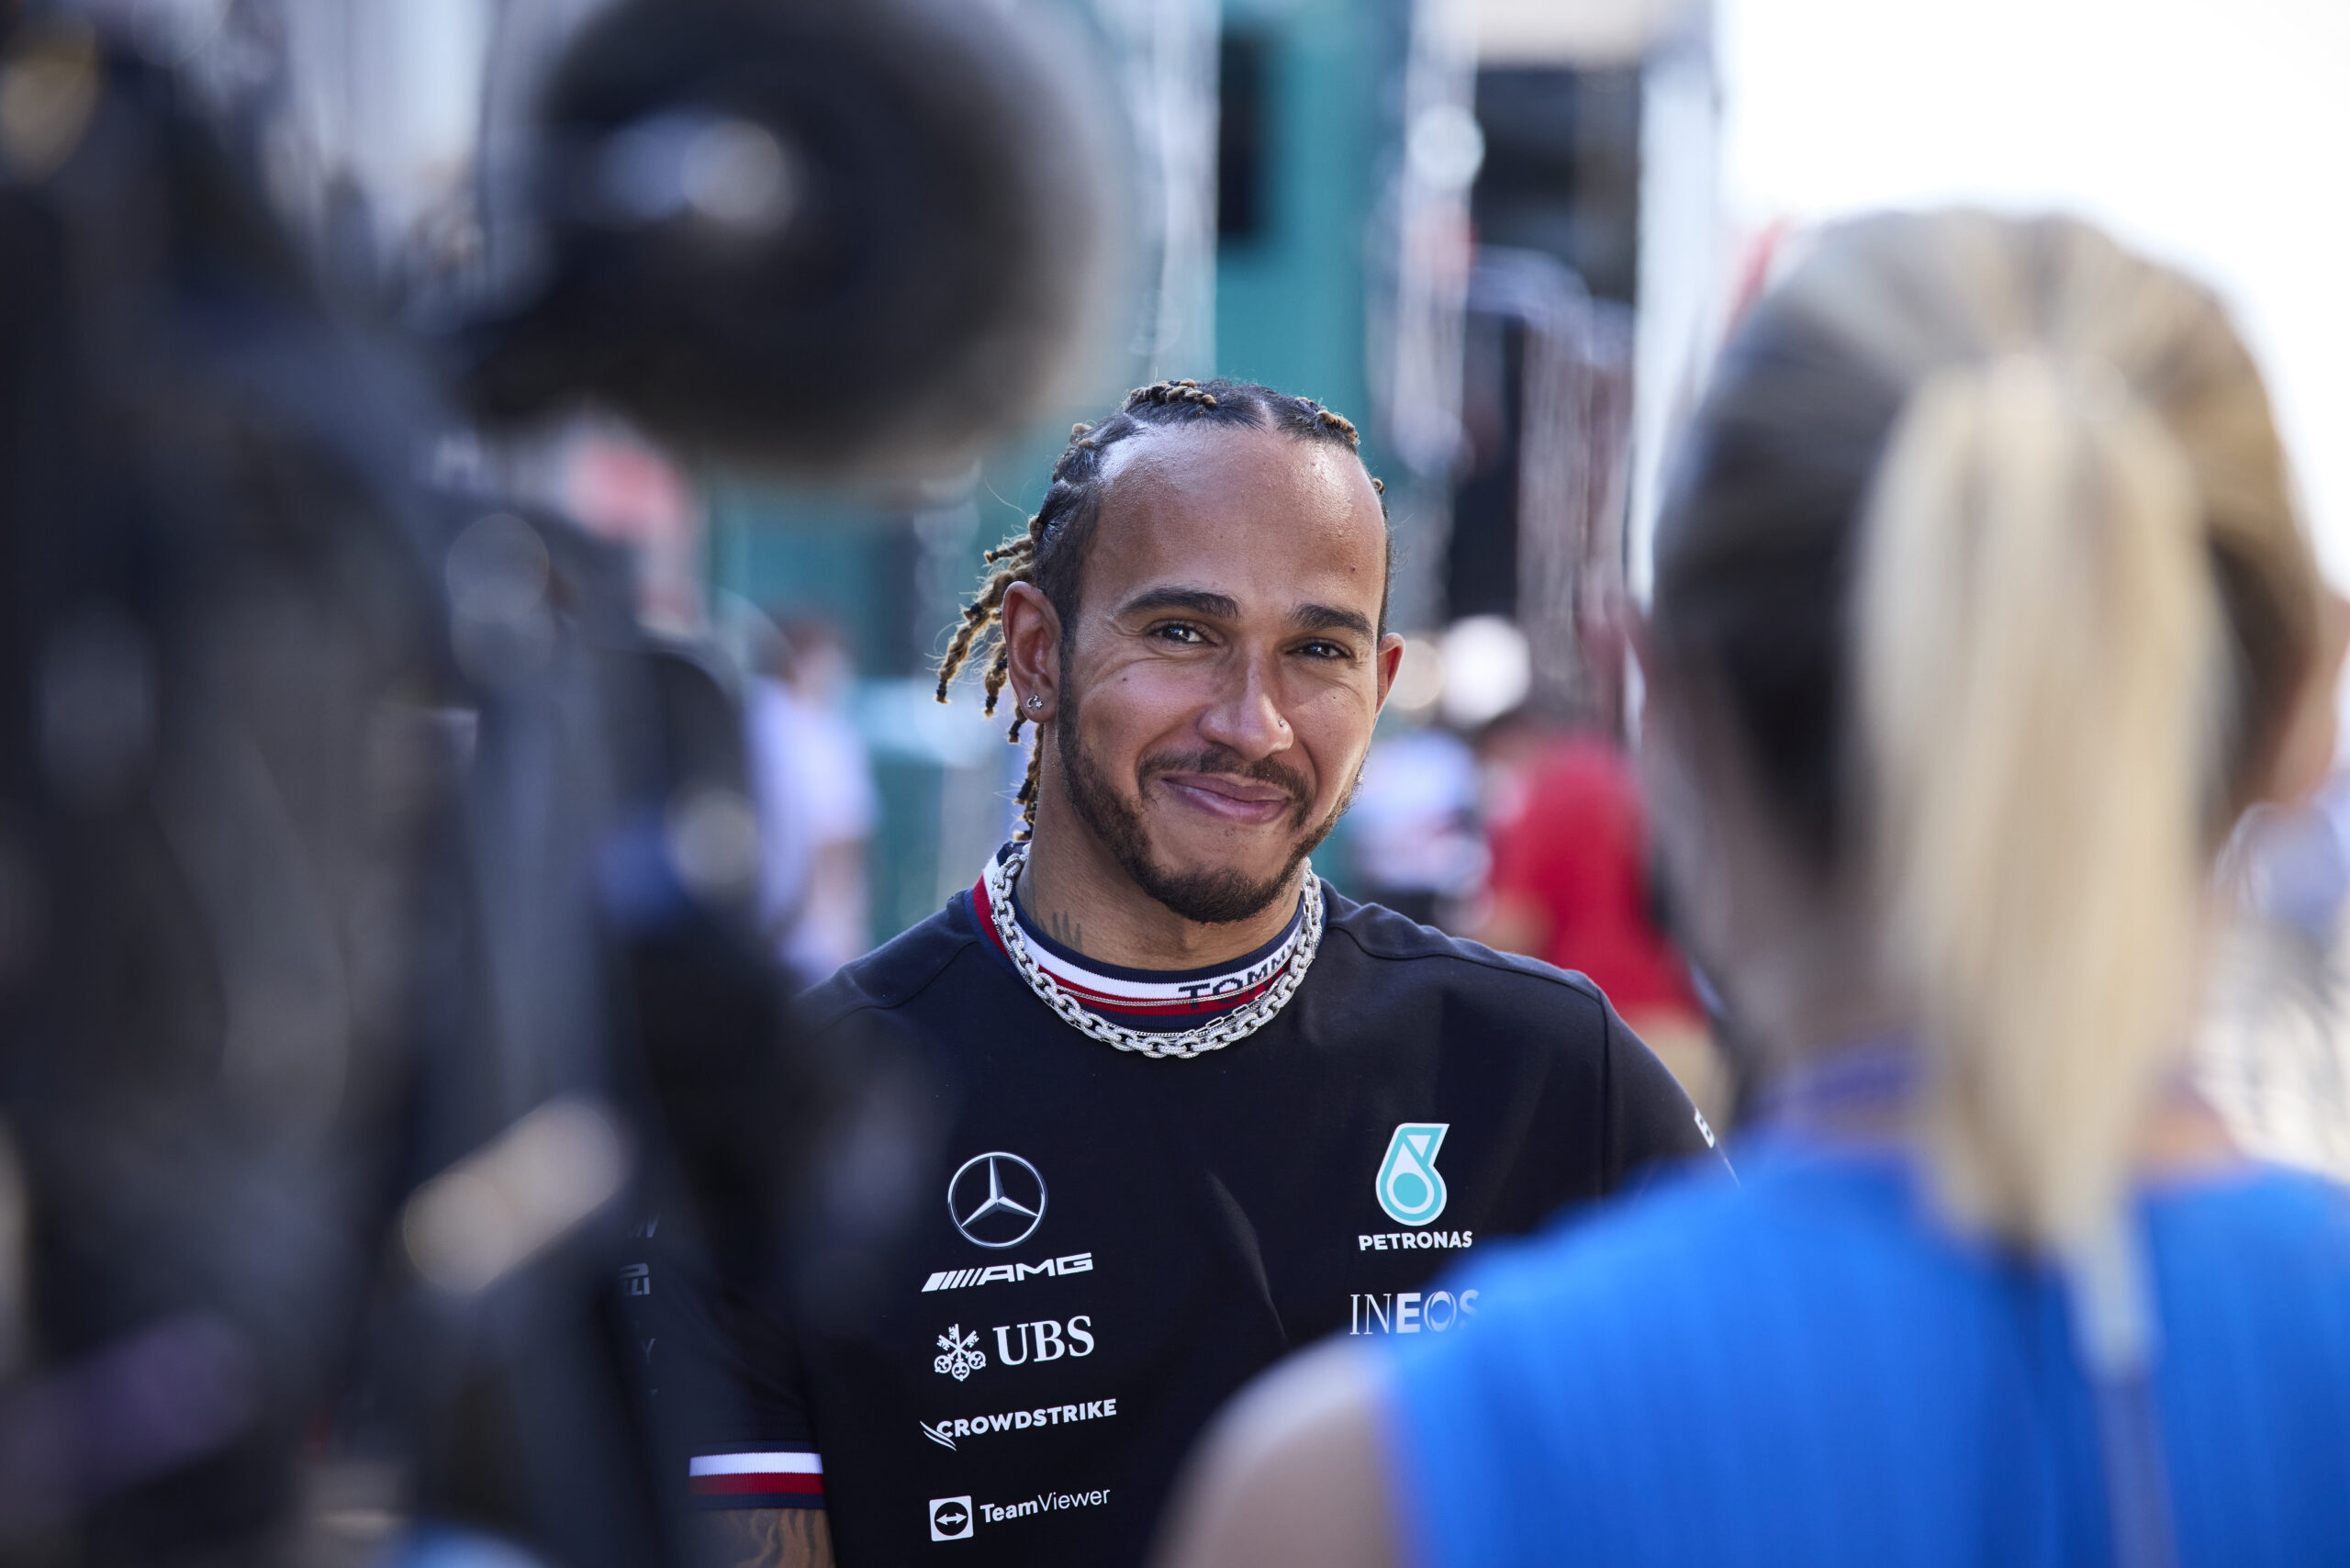 For one thing, Lewis Hamilton seems optimistic about his chances on Sunday. (Photo: Steve Etherington | Mercedes-AMG Petronas Formula One Team)